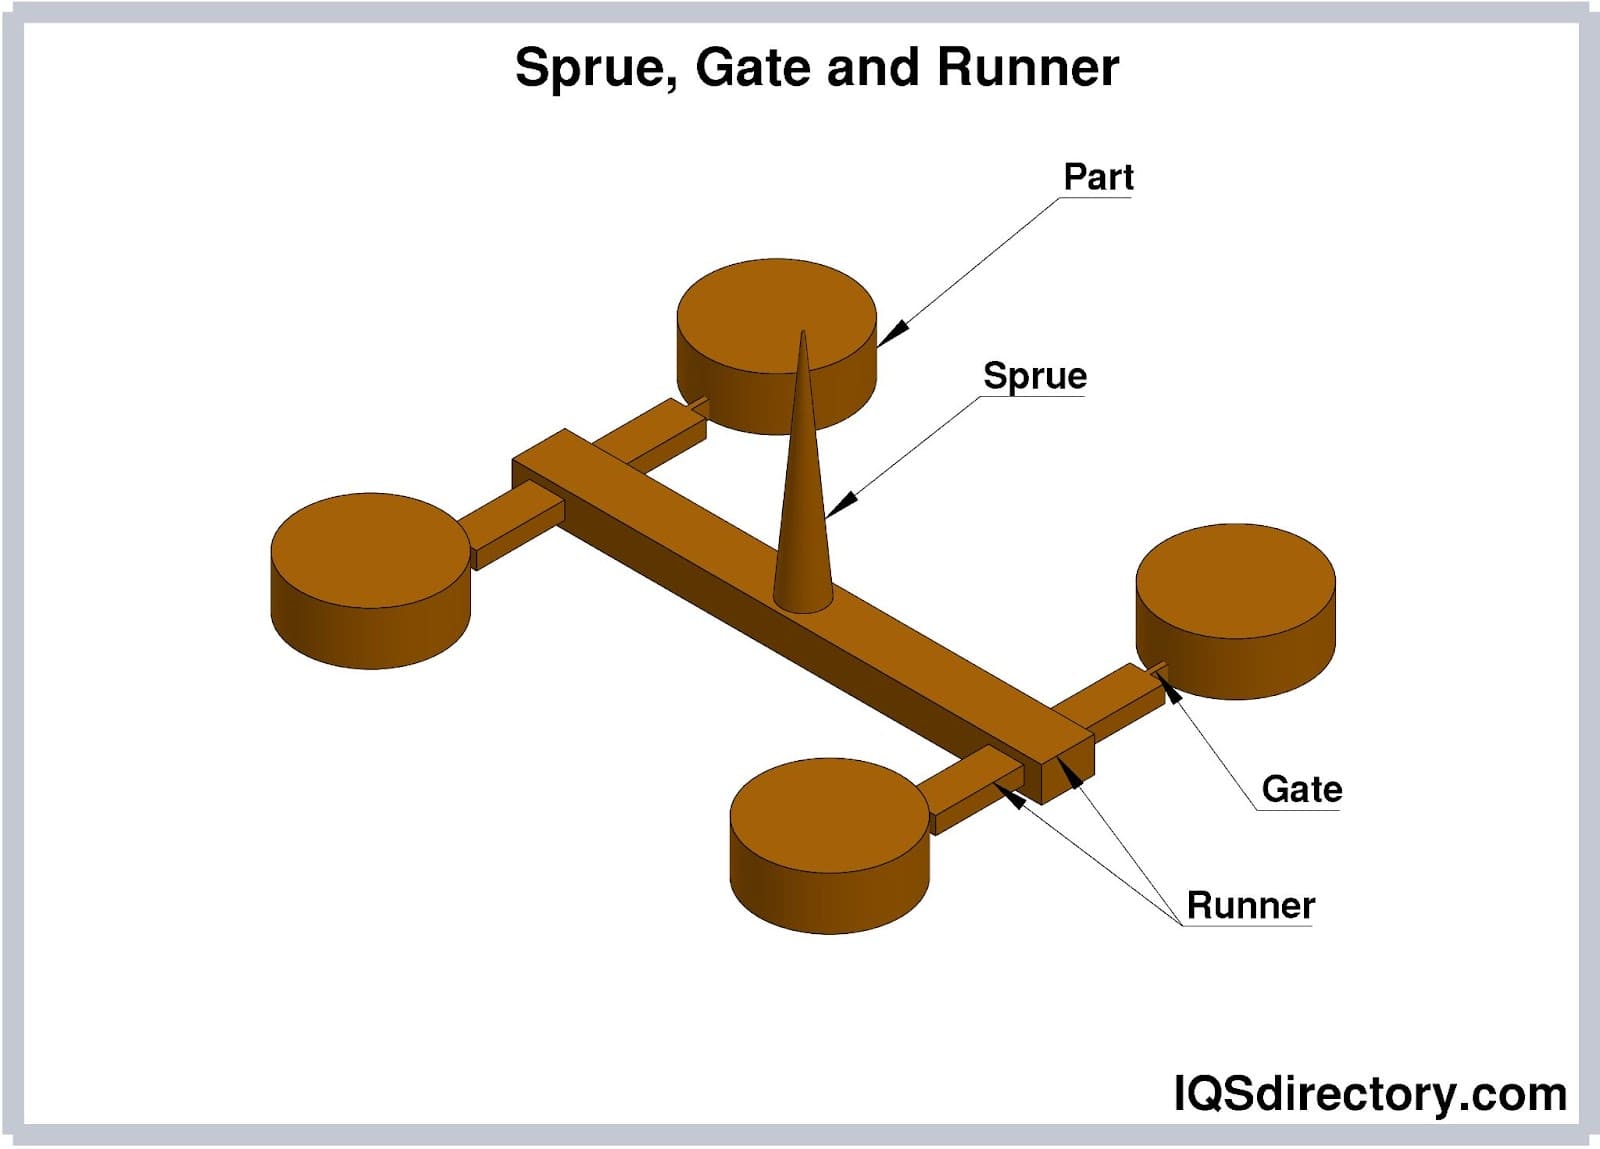 Sprue, Gate and Runner